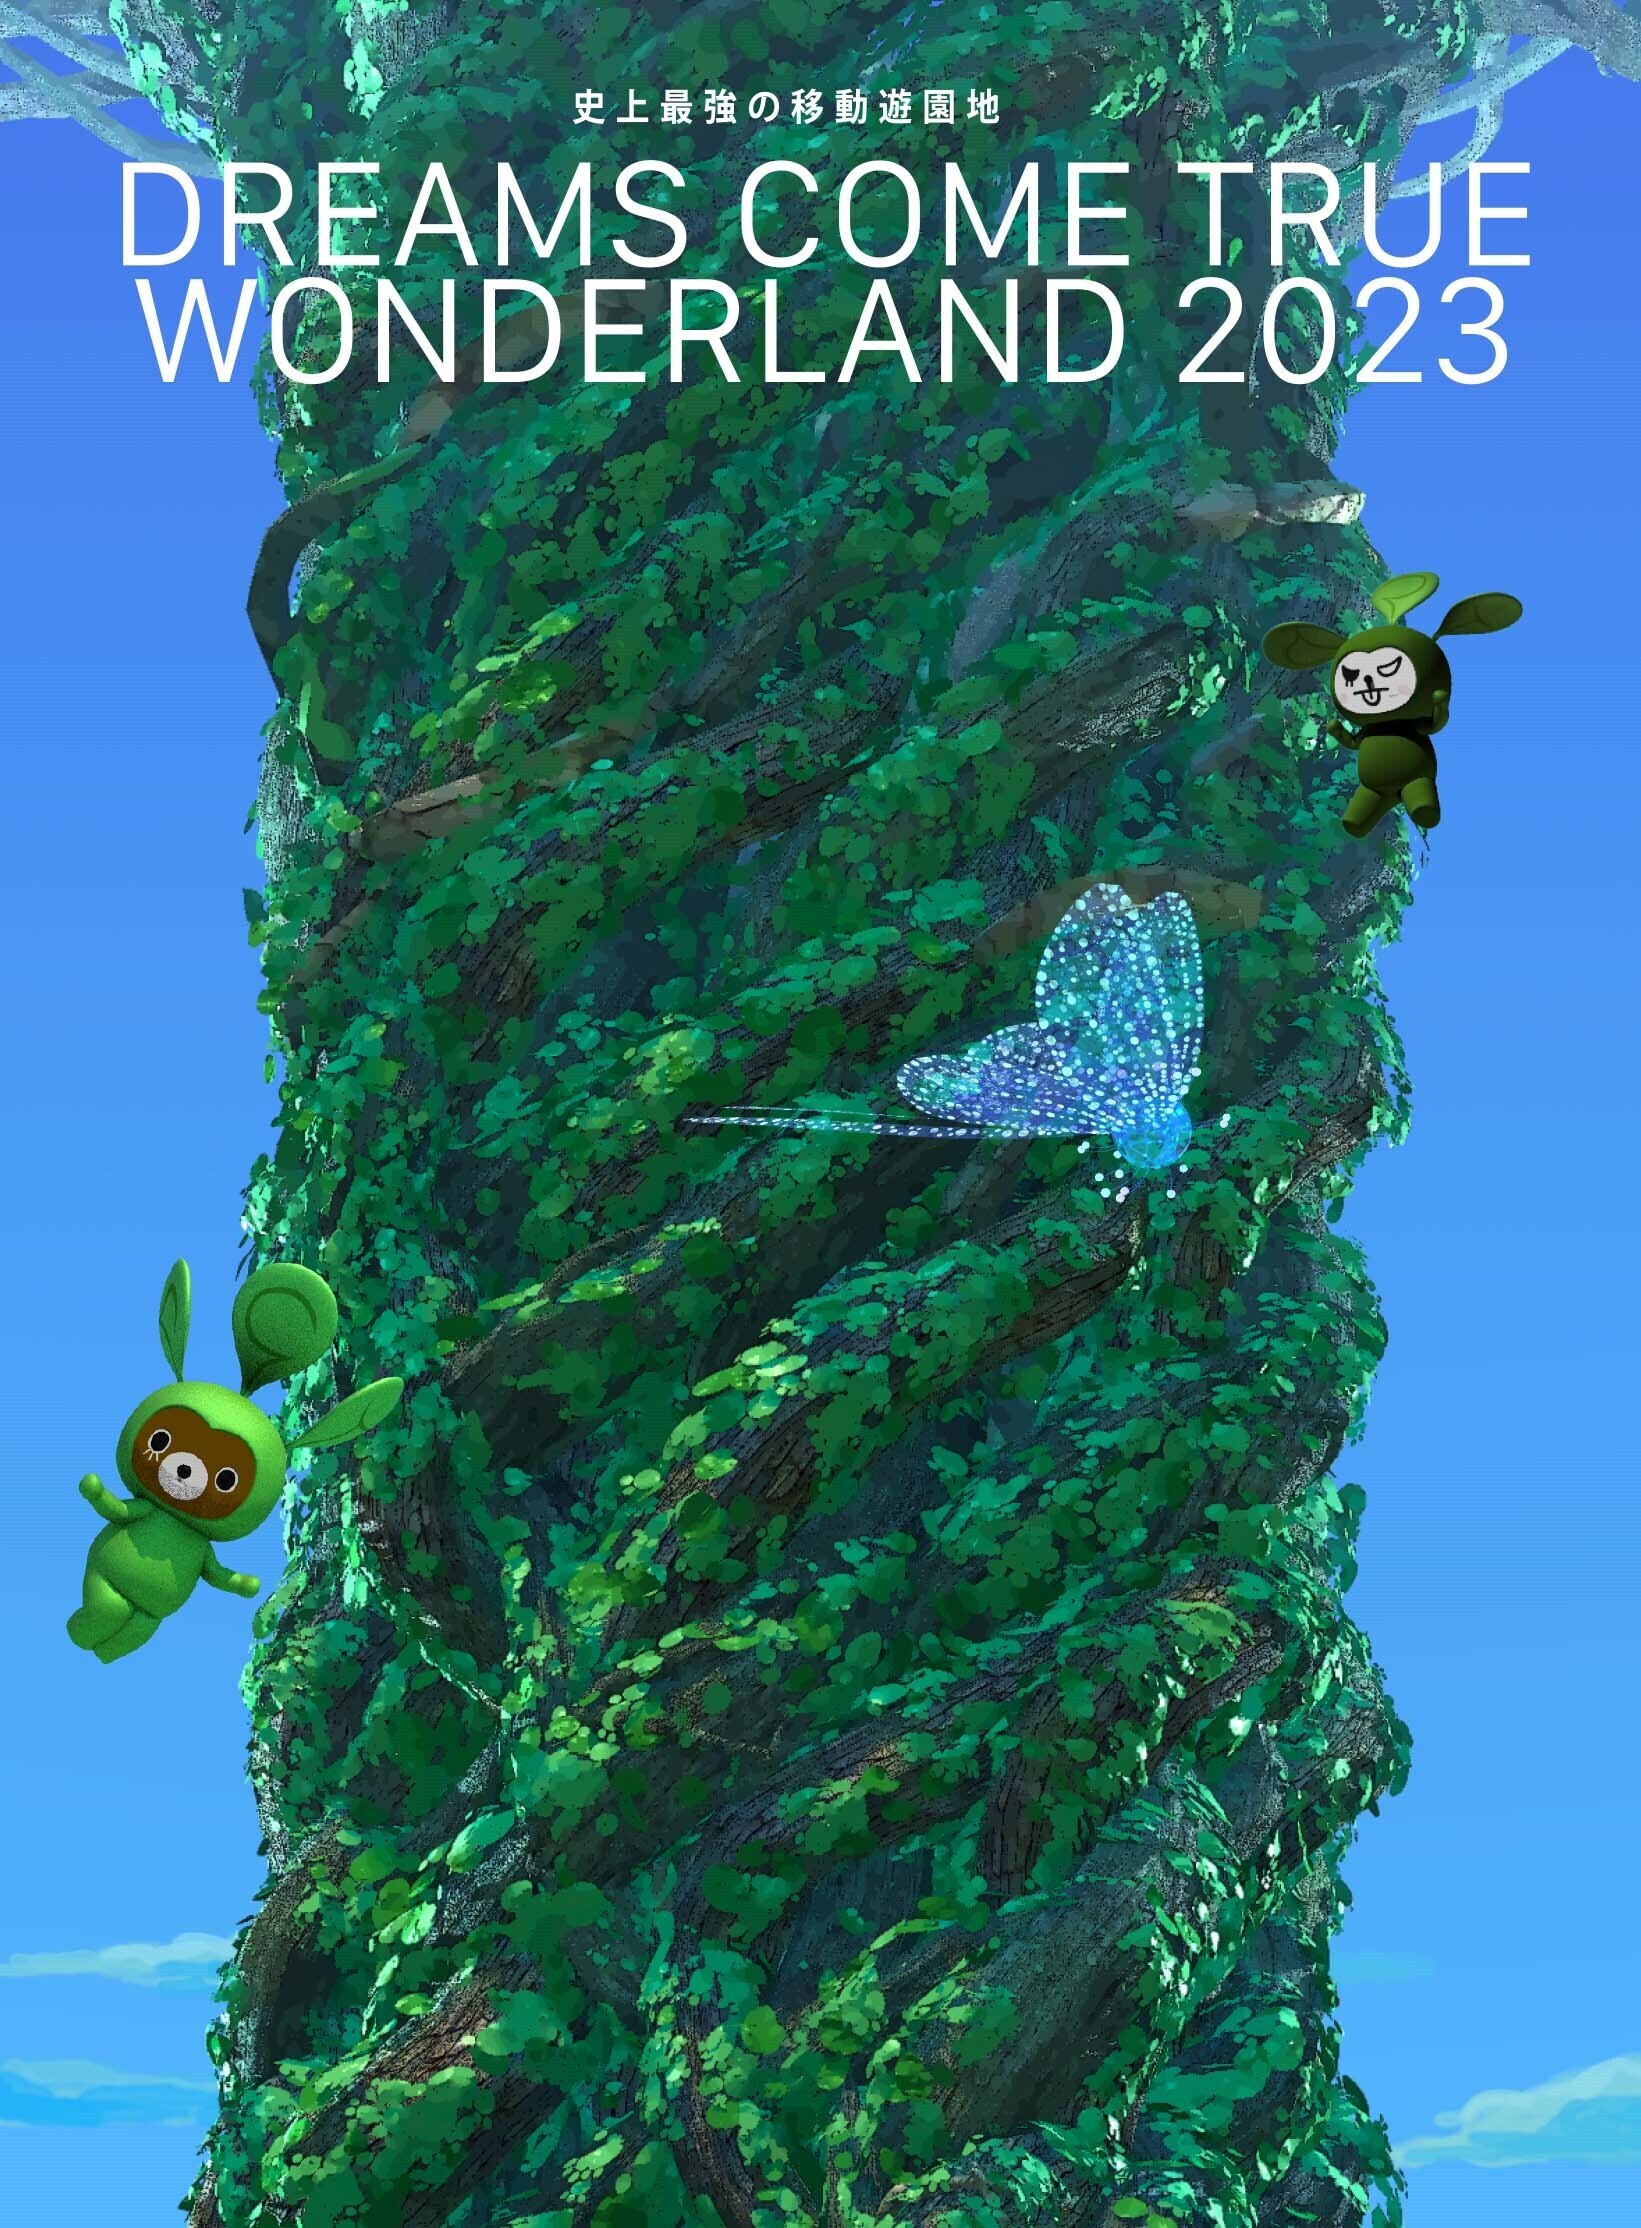 DREAMS COME TRUE【DVD】史上最強の移動遊園地 DREAMS COME TRUE WONDERLAND 2023